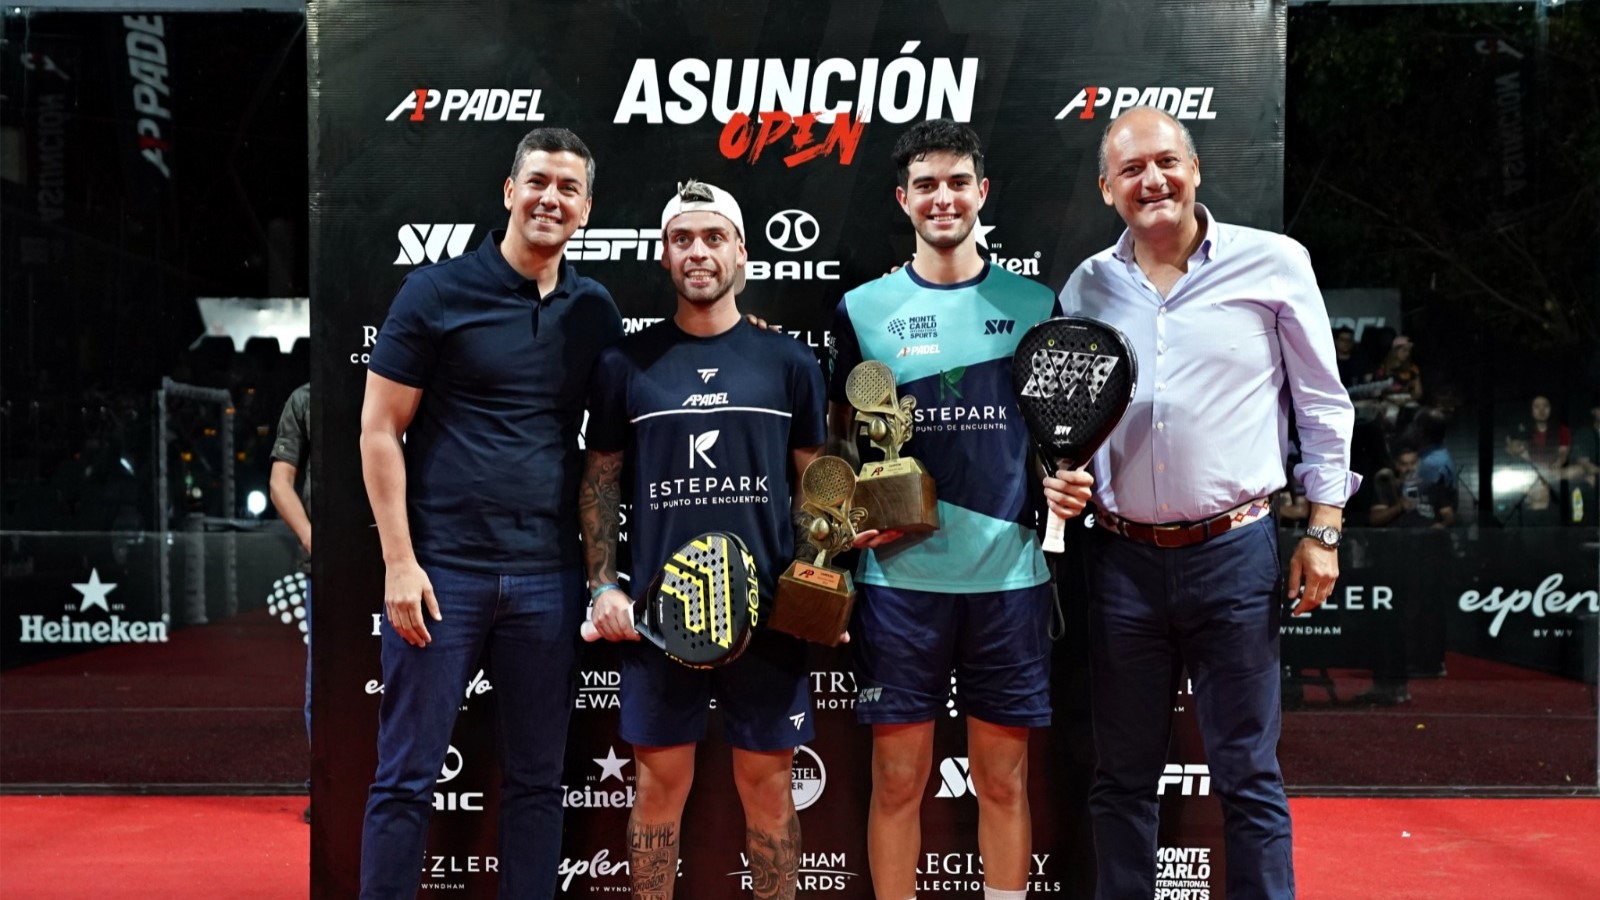 A1 Padel Asuncion Open – The title for De Pascual/Alfonso!